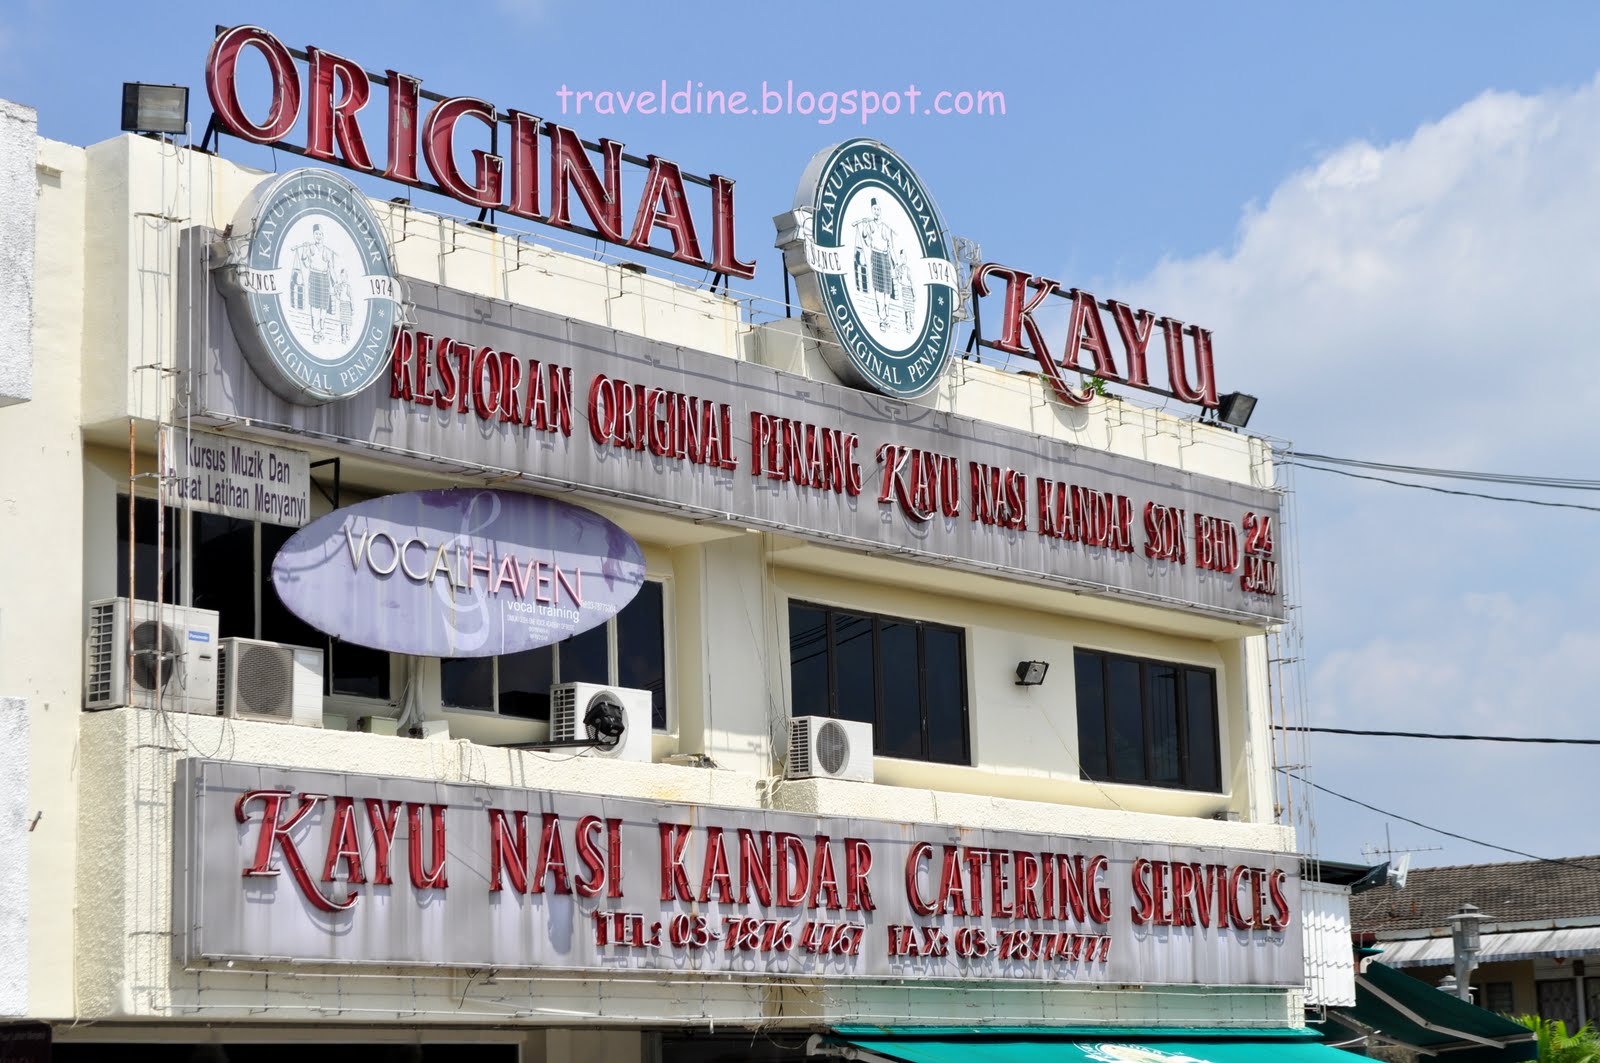 Travel and Dining Experience Restoran Original Kayu  Nasi 